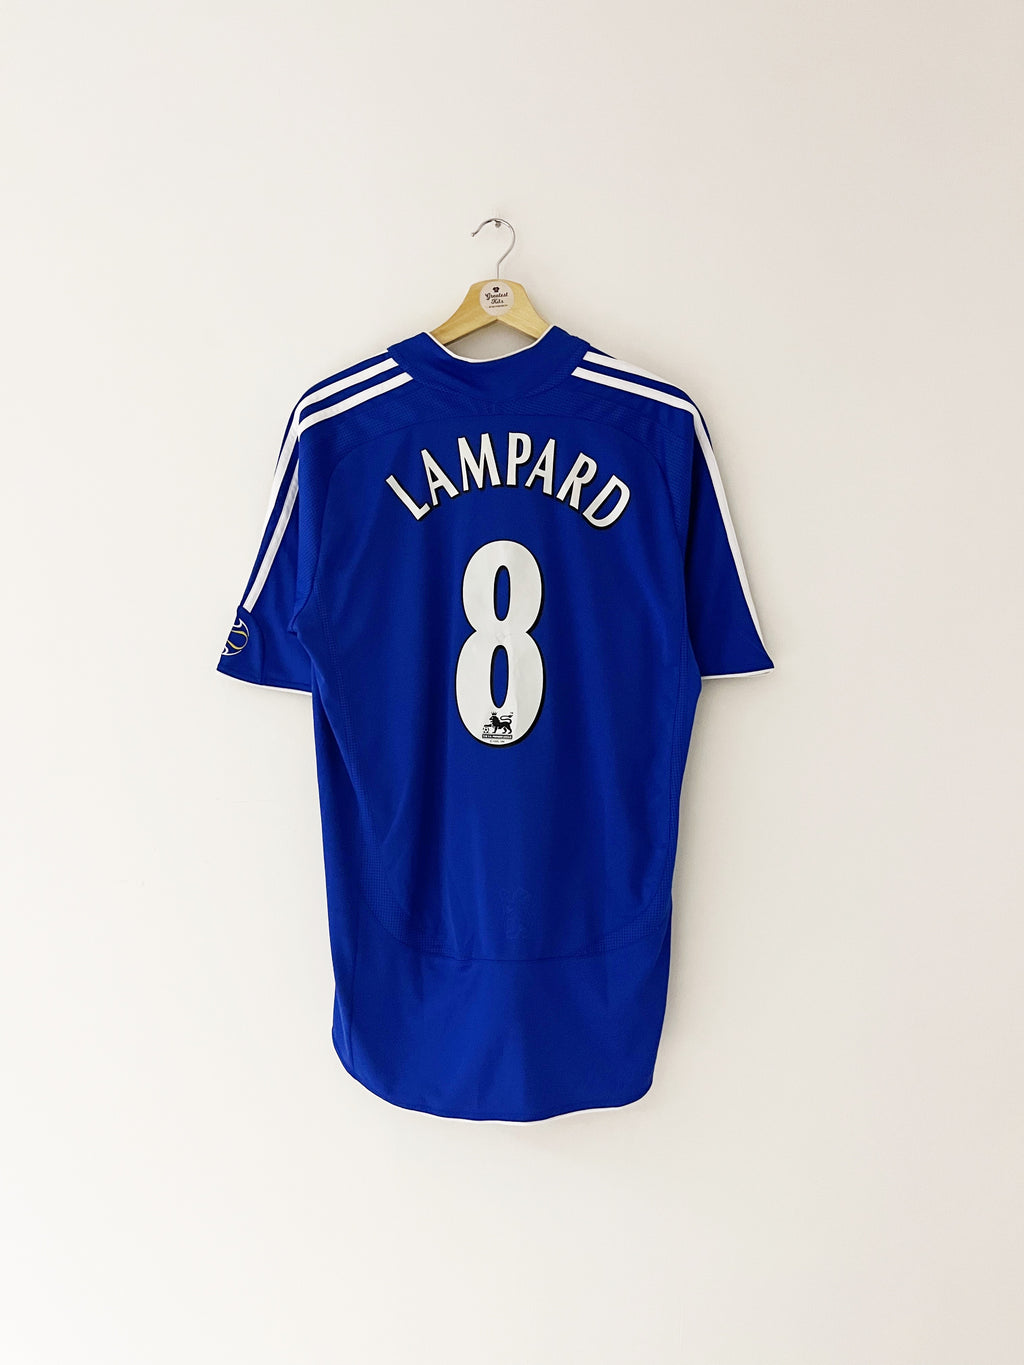 2006/08 Camiseta local del Chelsea Lampard n.º 8 (M) 9/10